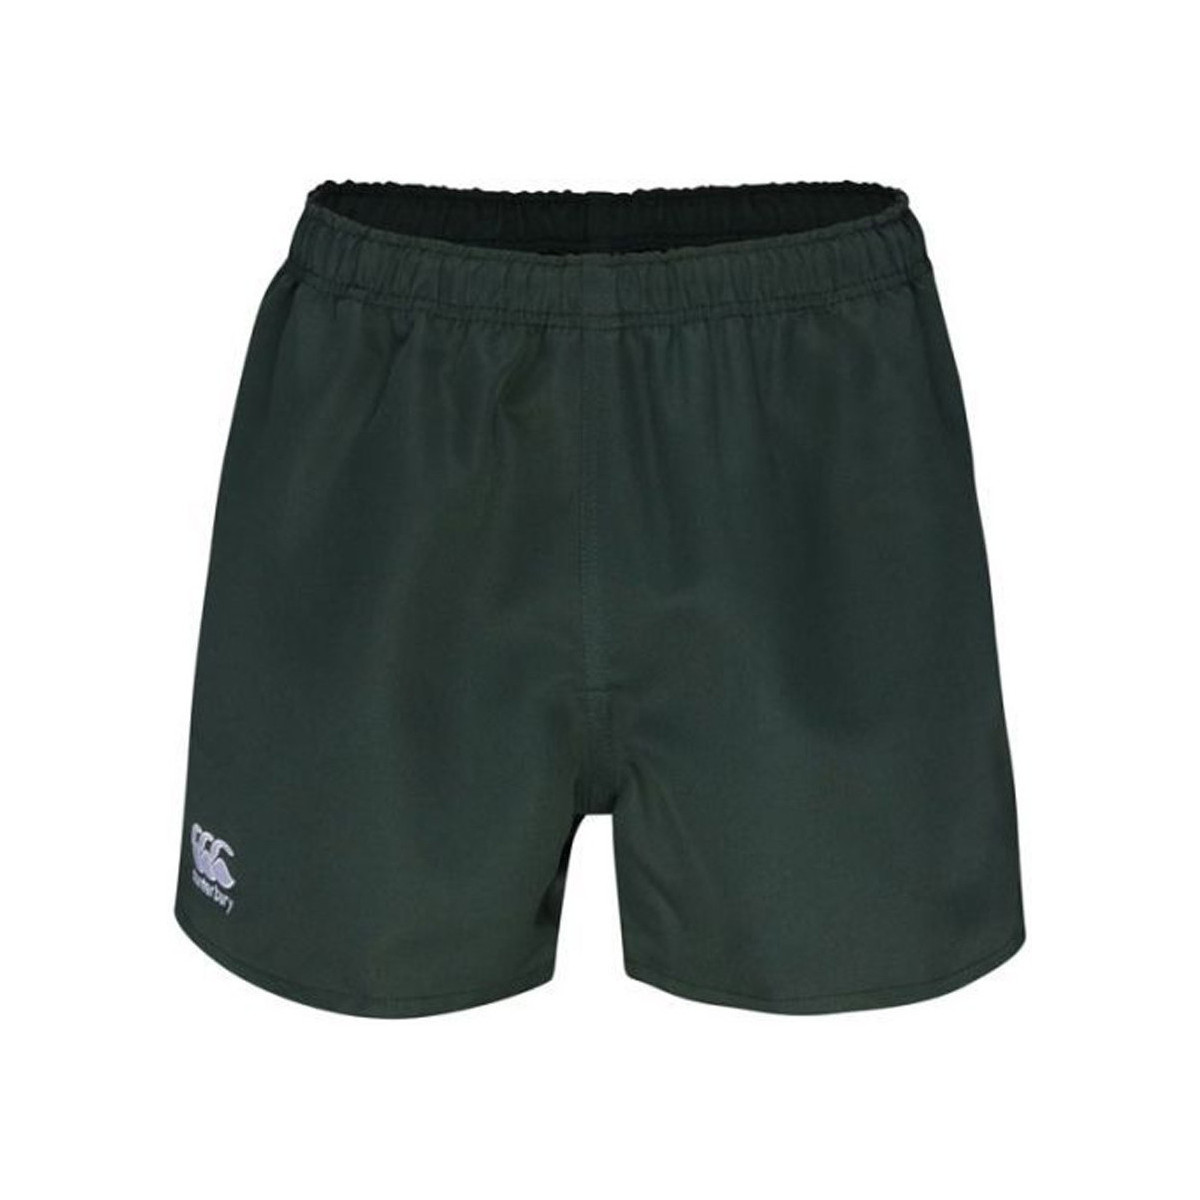 Kleidung Jungen Shorts / Bermudas Canterbury E723447 Grün